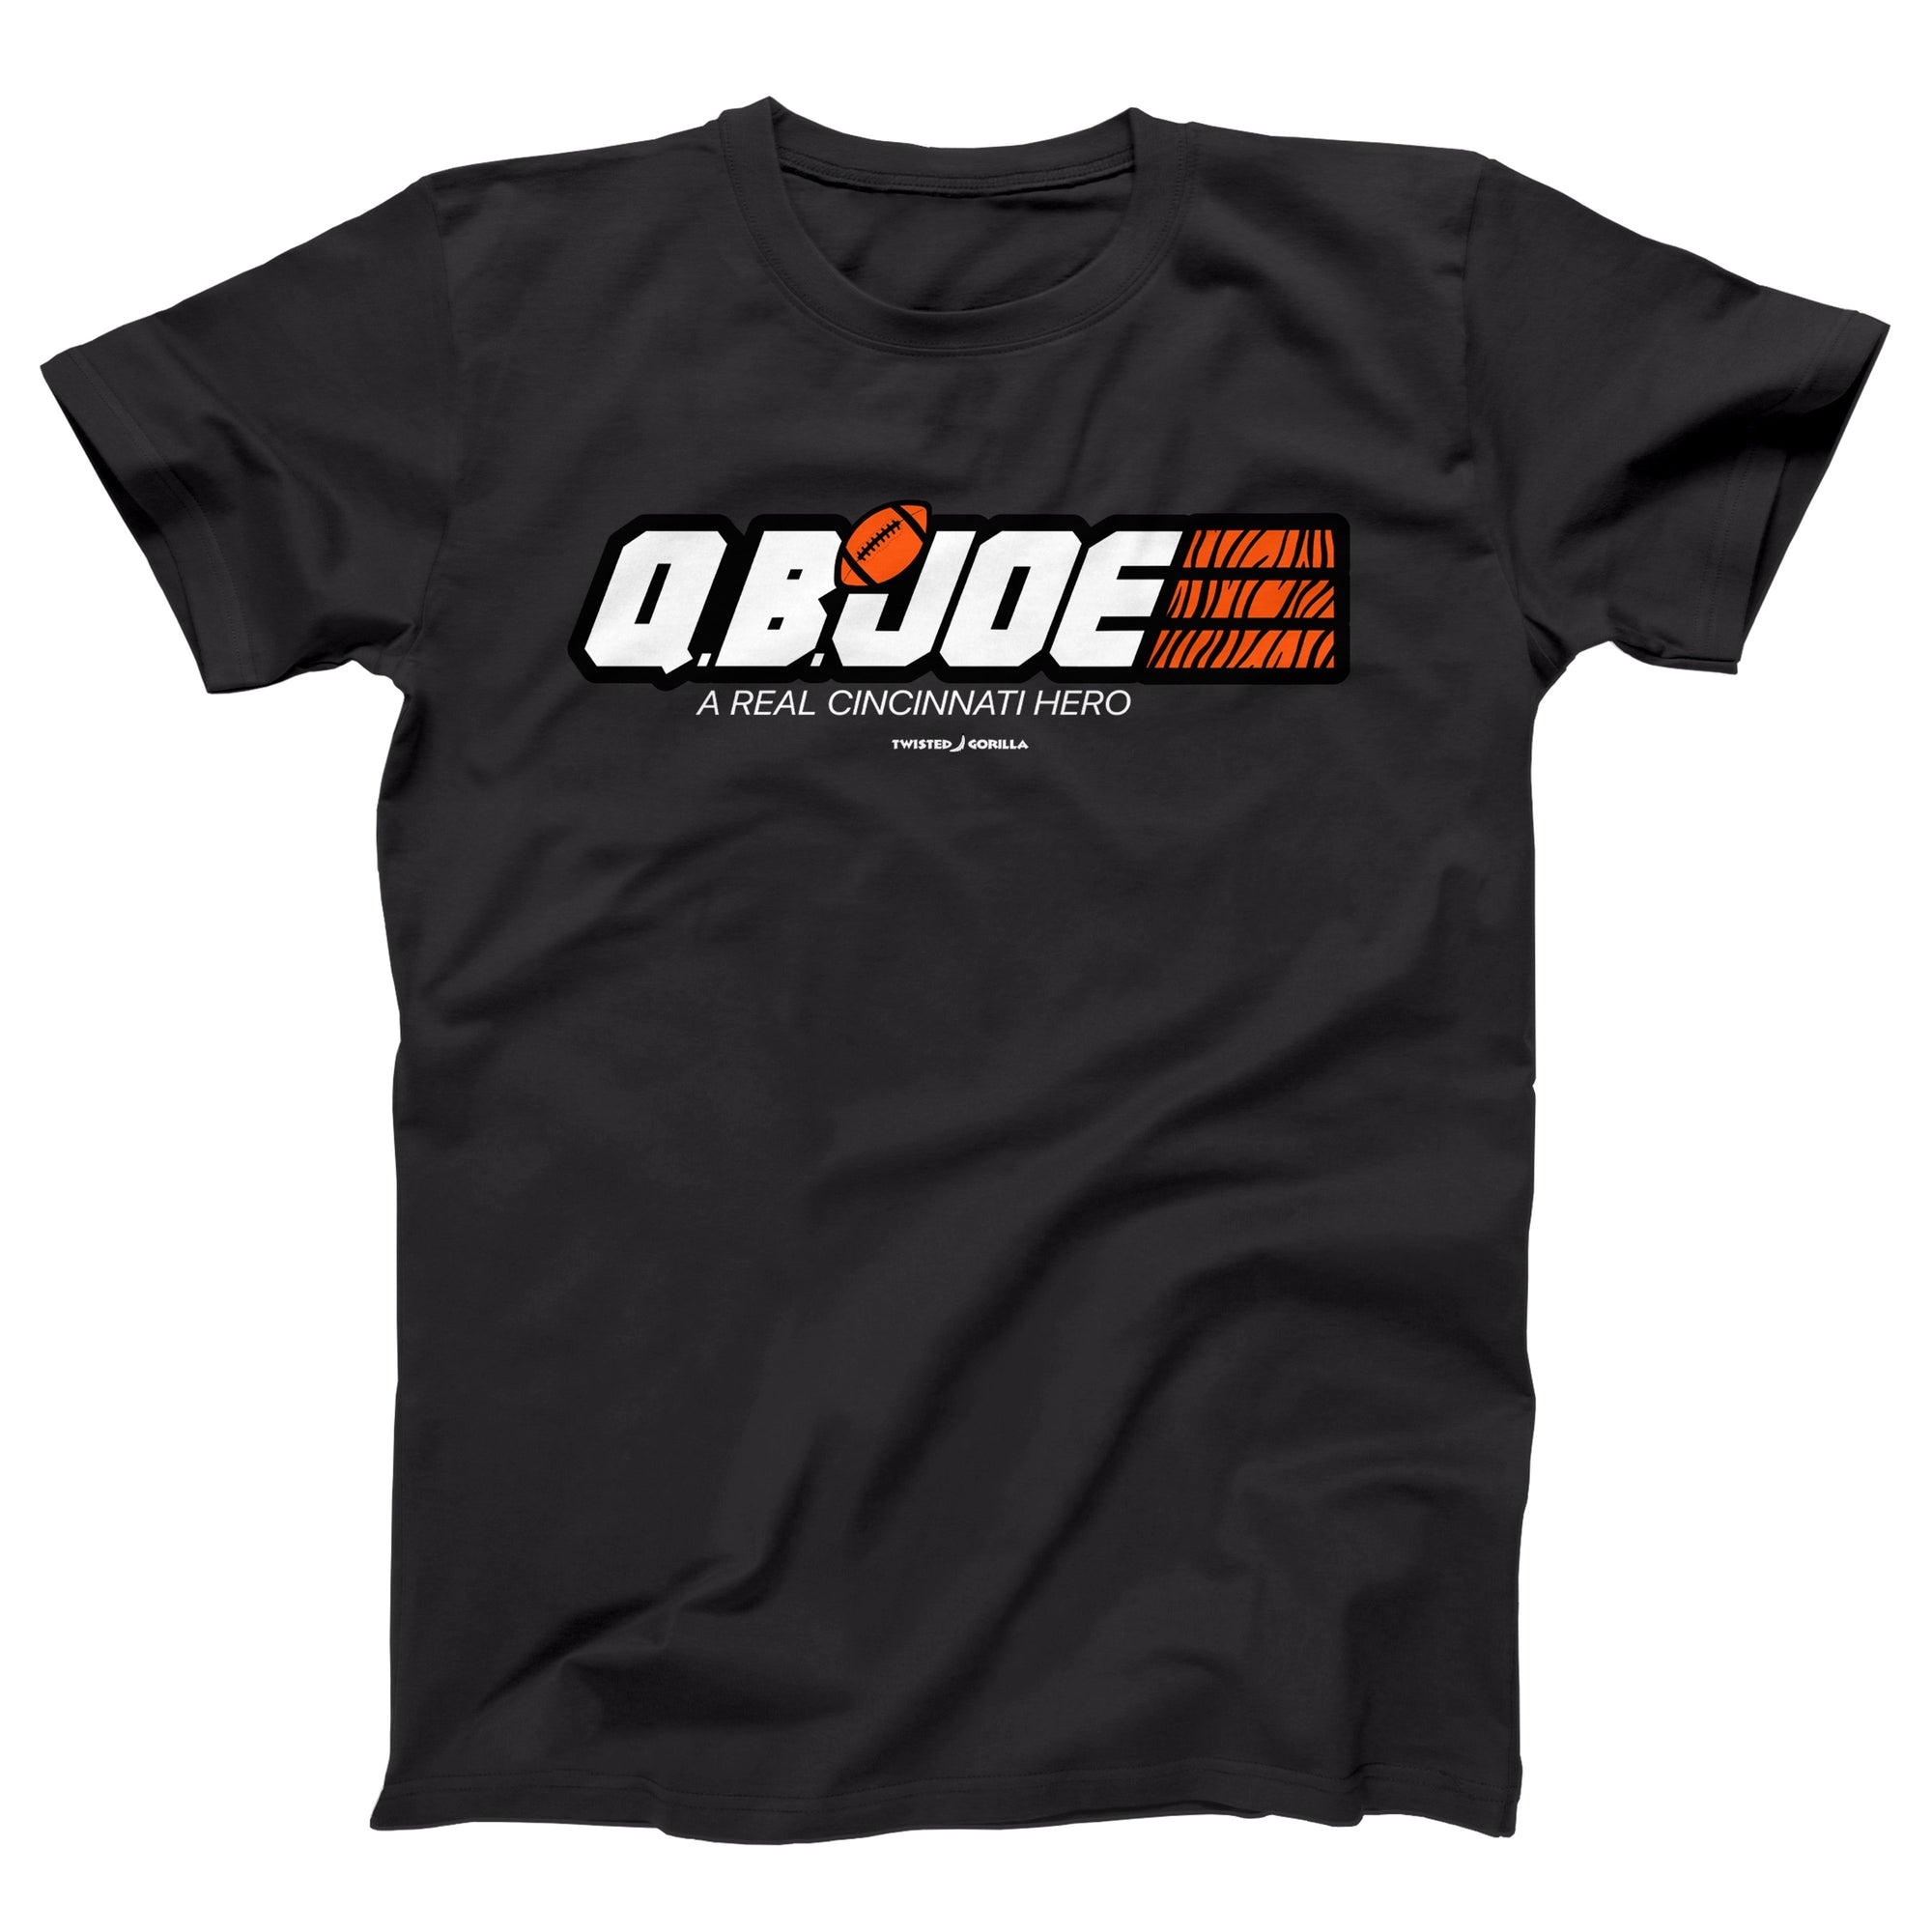 QB Joe Adult Unisex T-Shirt - Twisted Gorilla